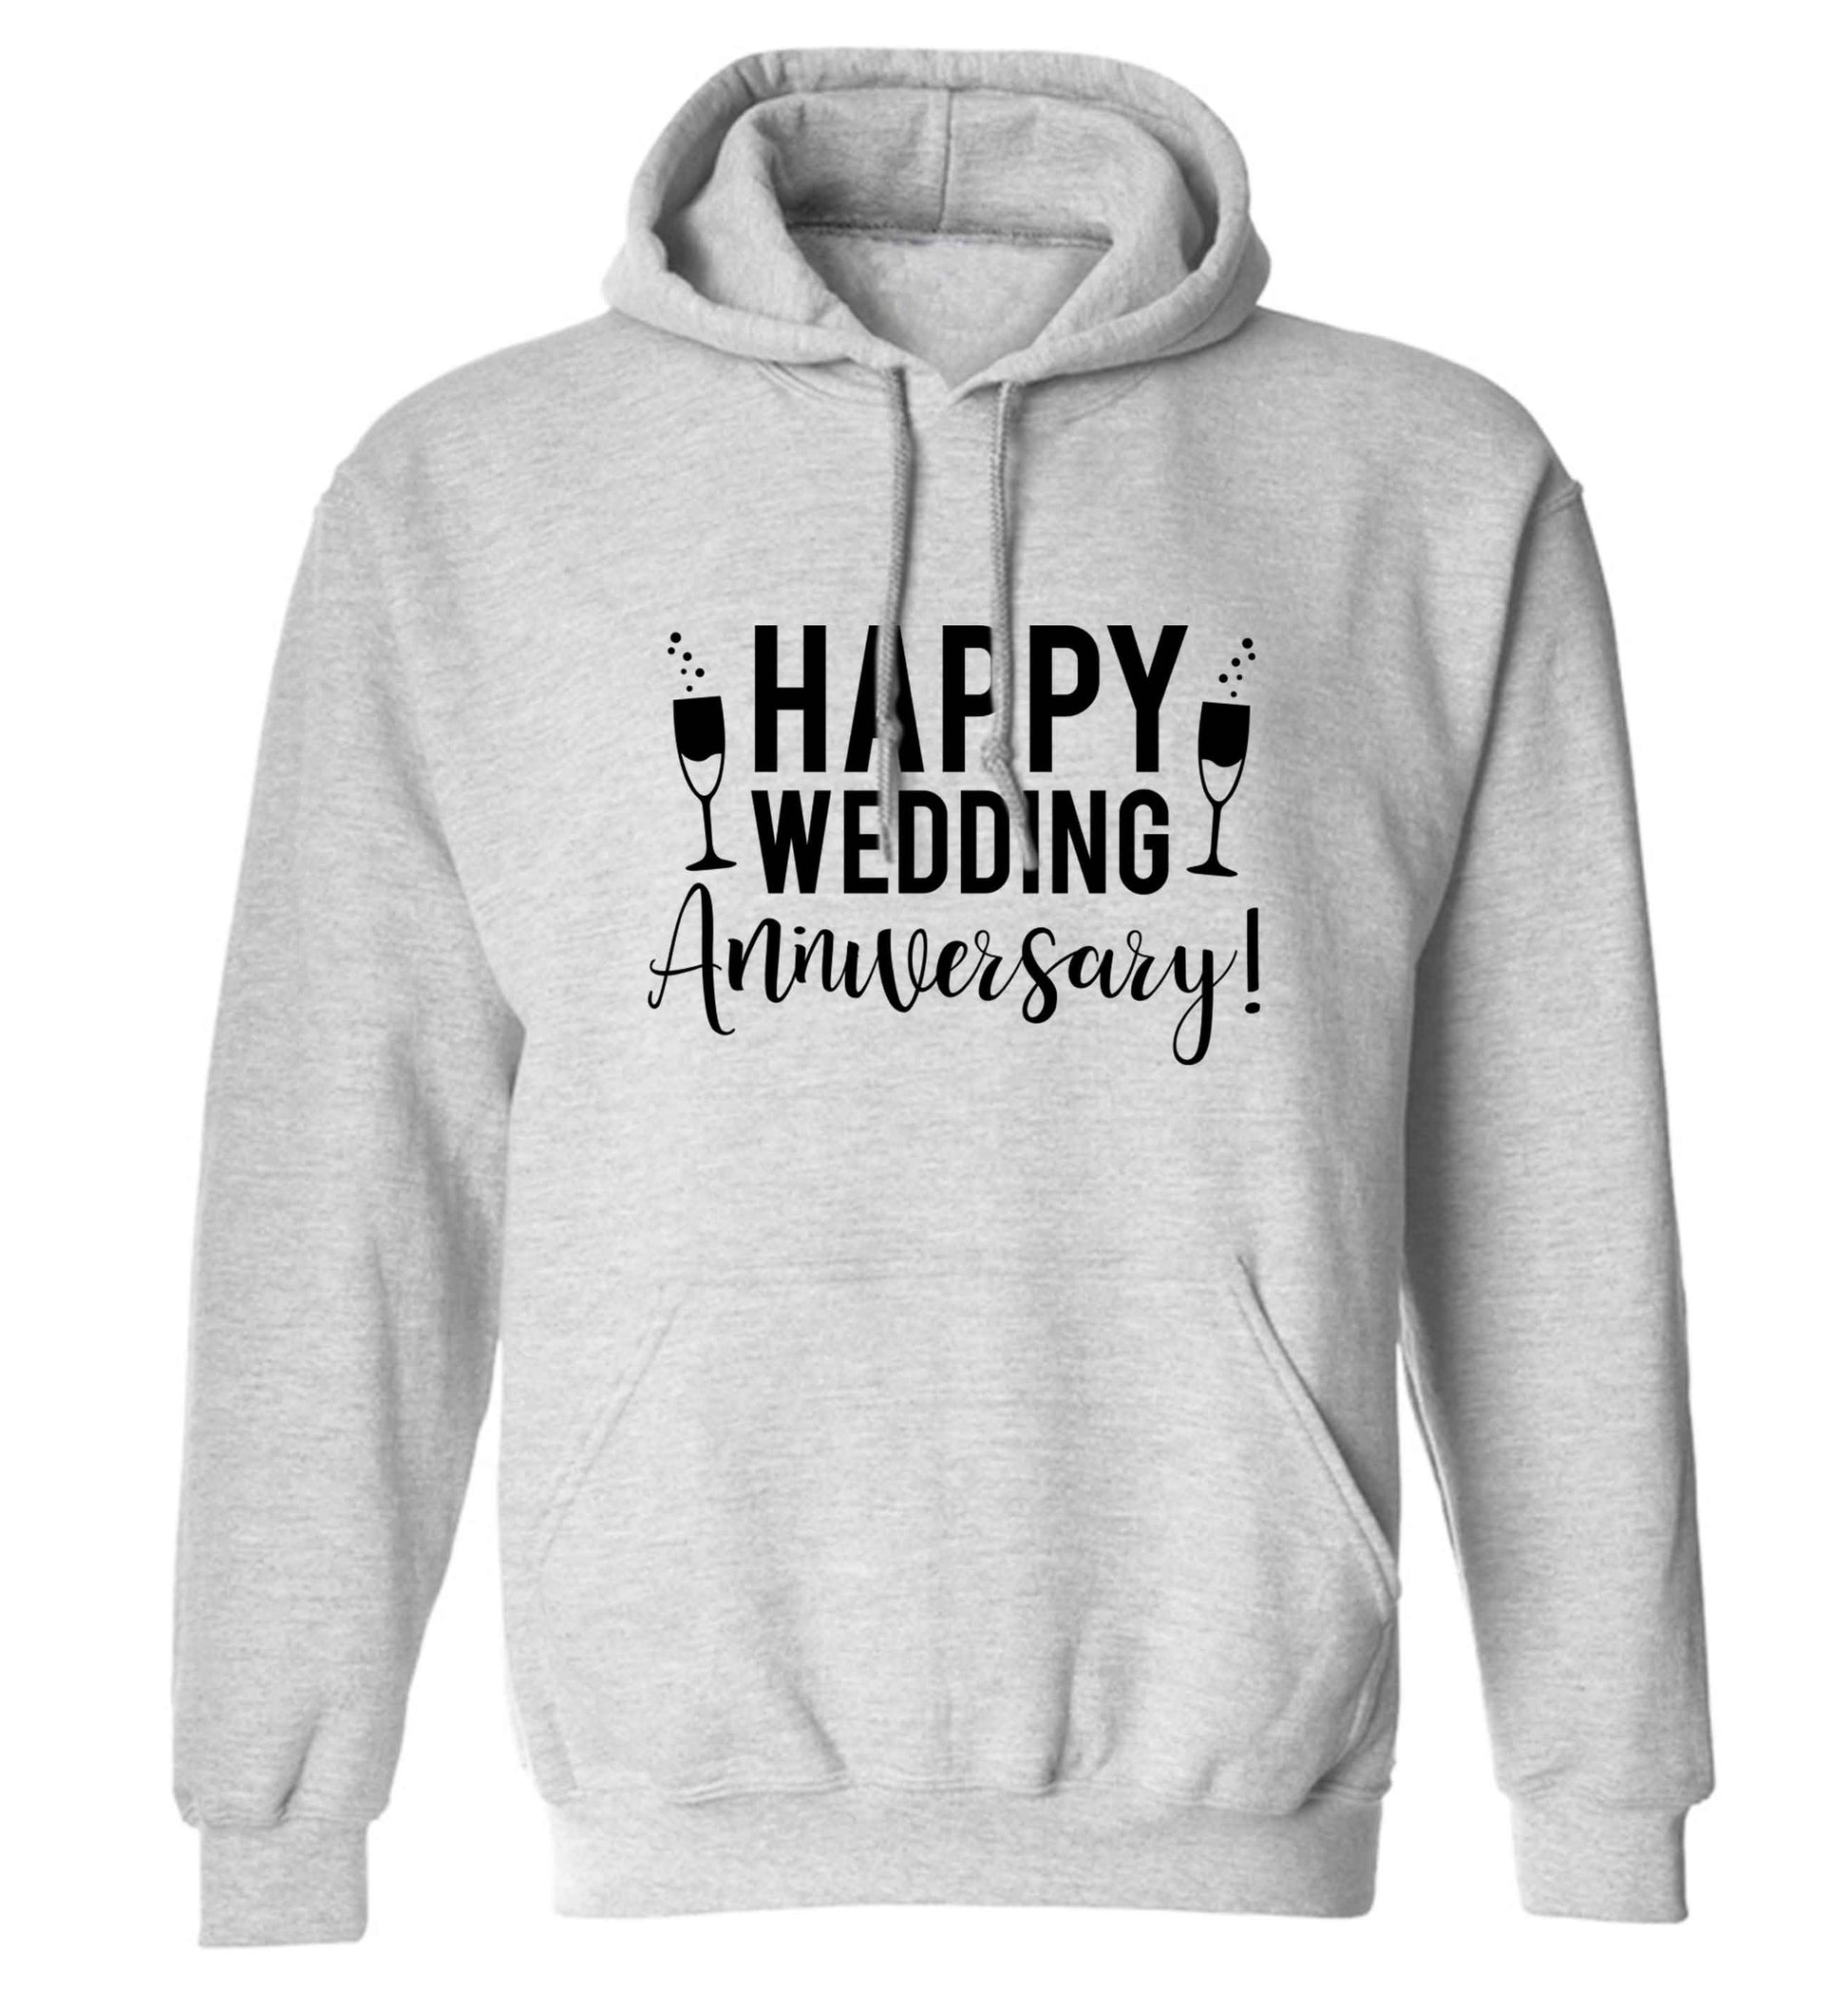 Happy wedding anniversary! adults unisex grey hoodie 2XL